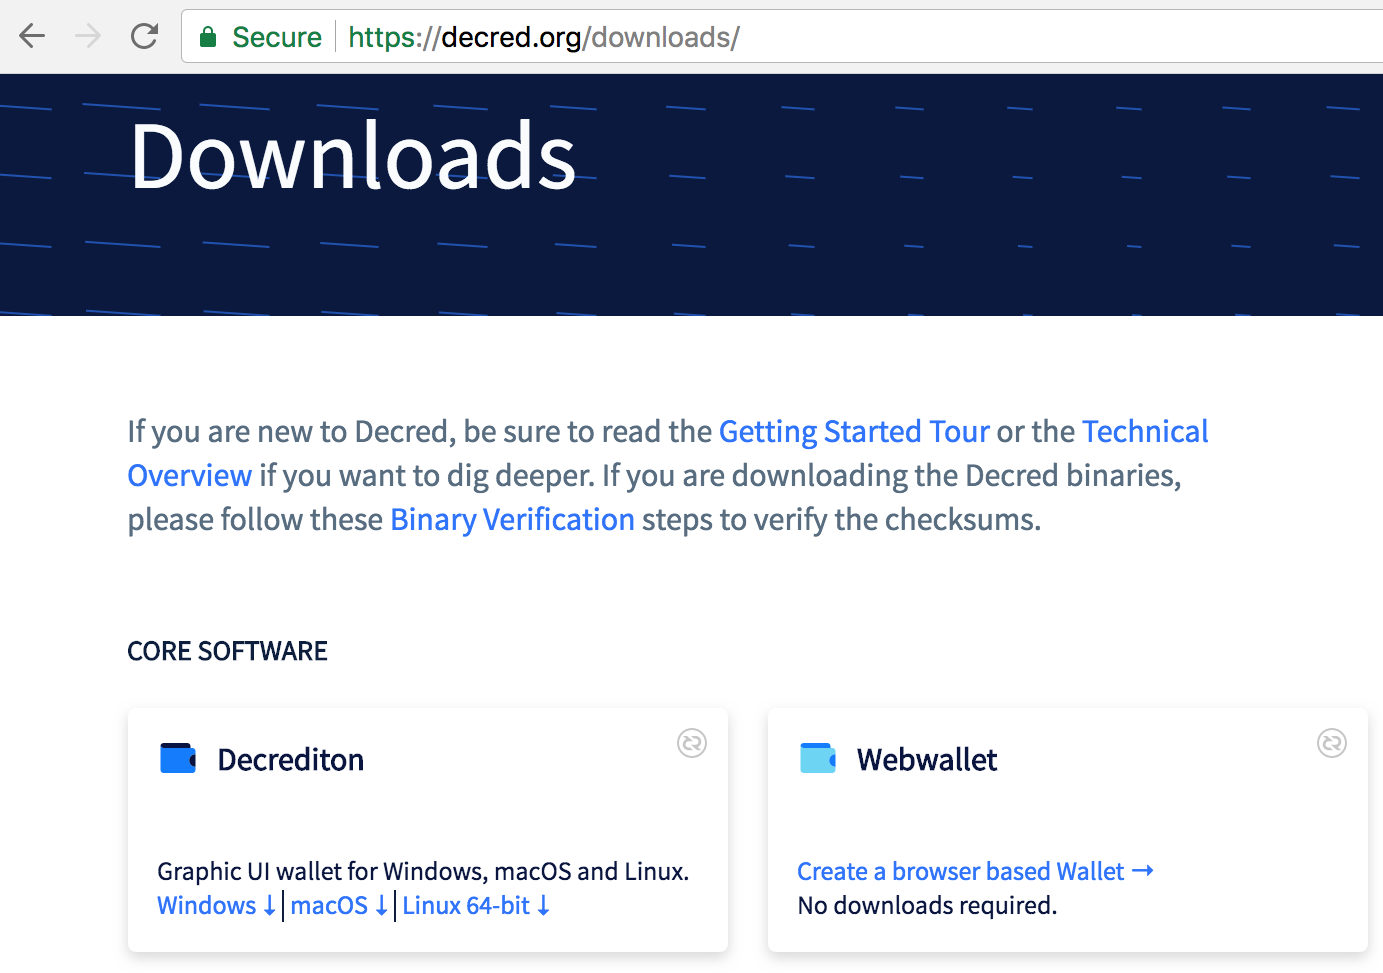 Figure 2 - Decrediton downloads for other platforms